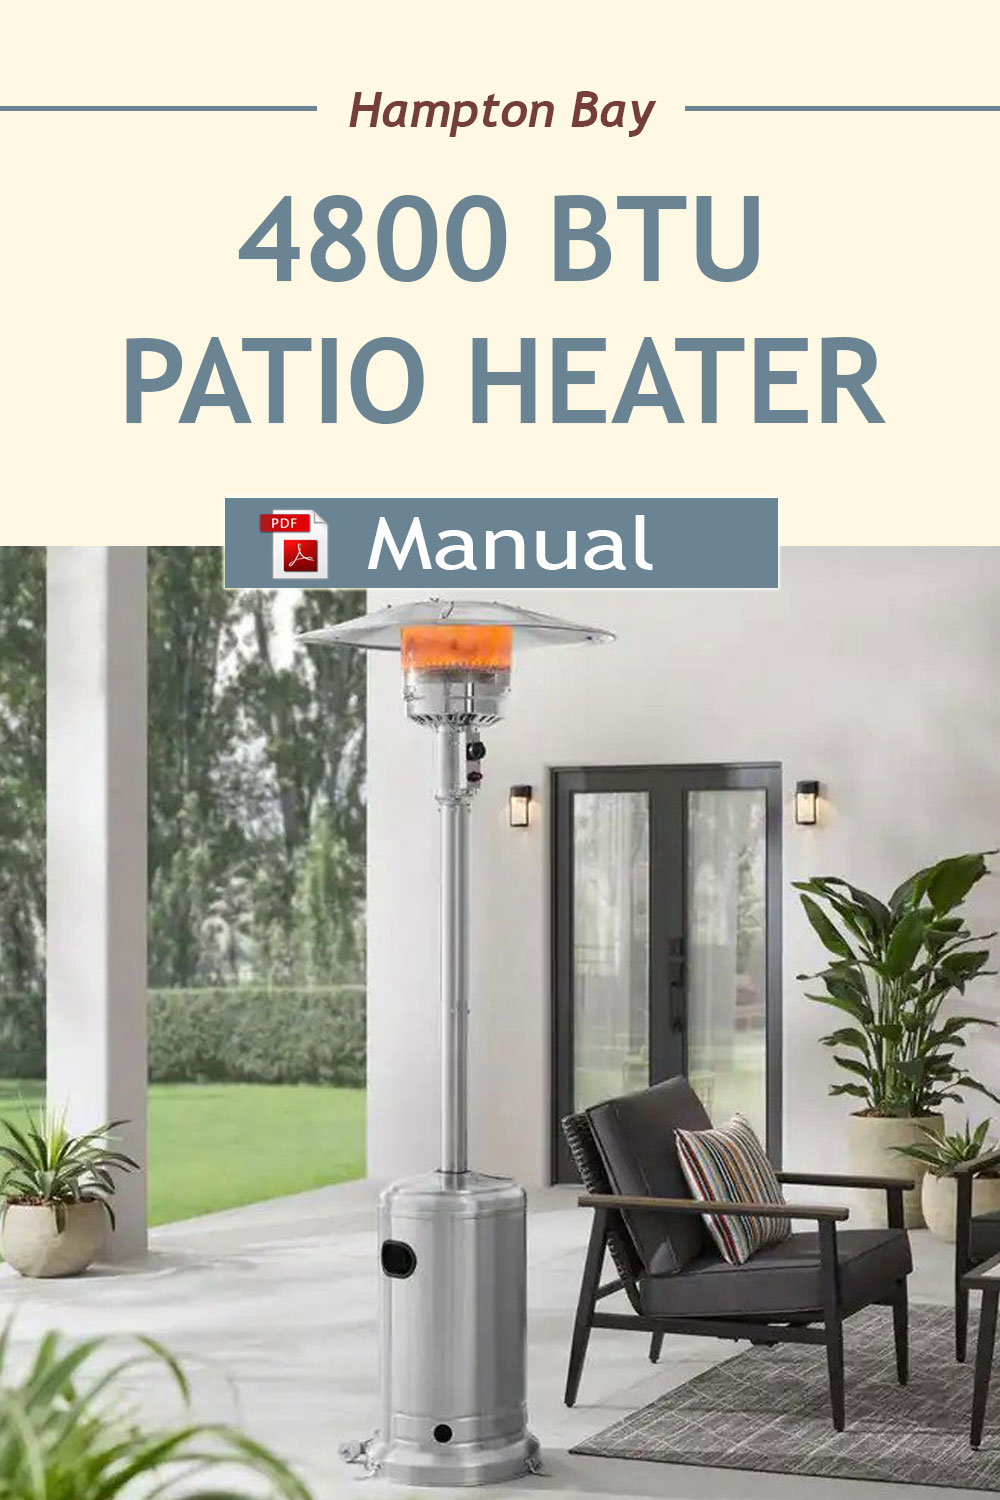 Hampton Bay 48000 BTU Stainless Steel Patio Heater Manual